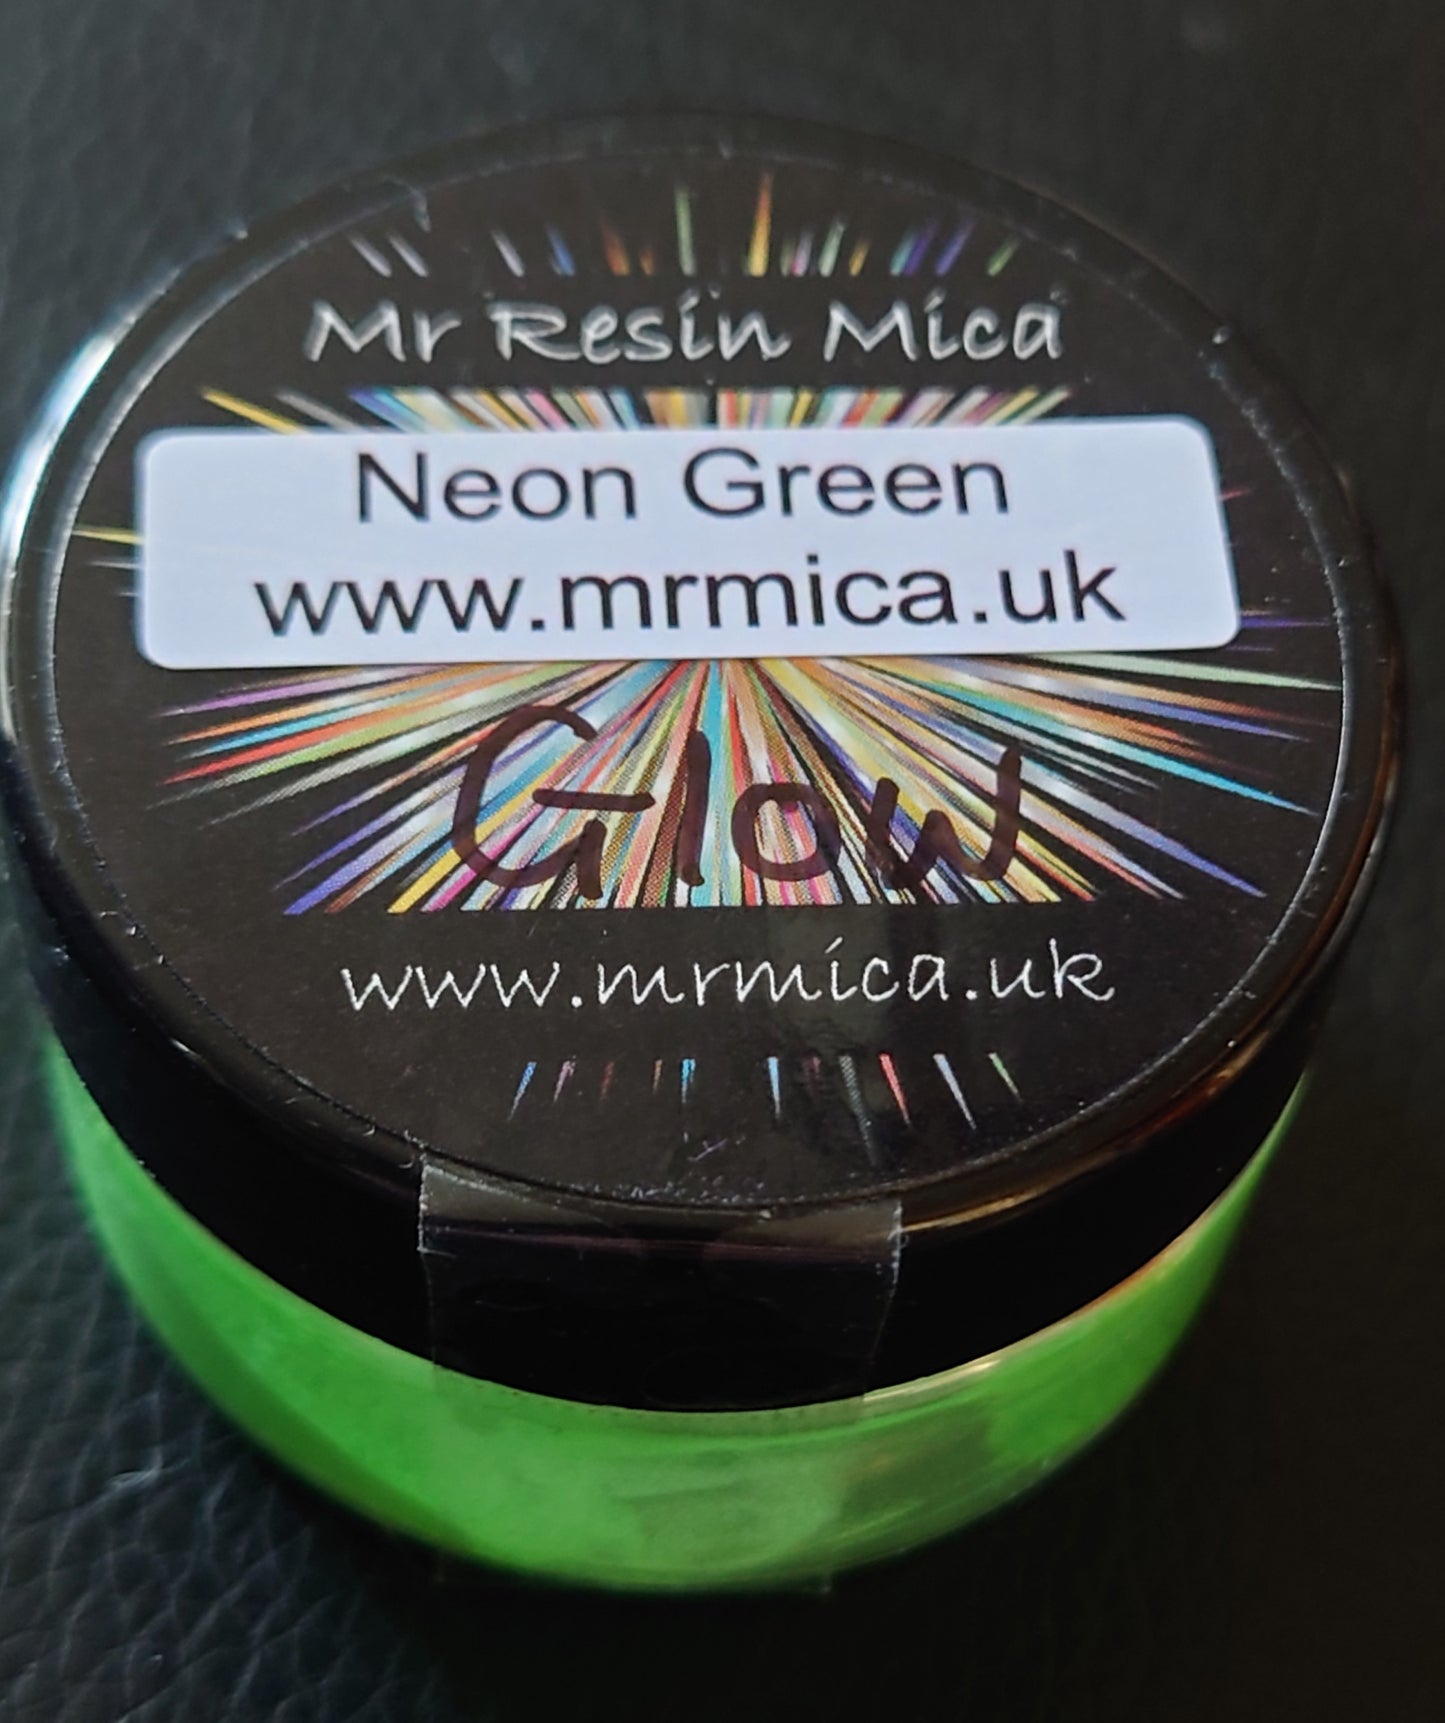 Mr Mica Neon Glow Powders